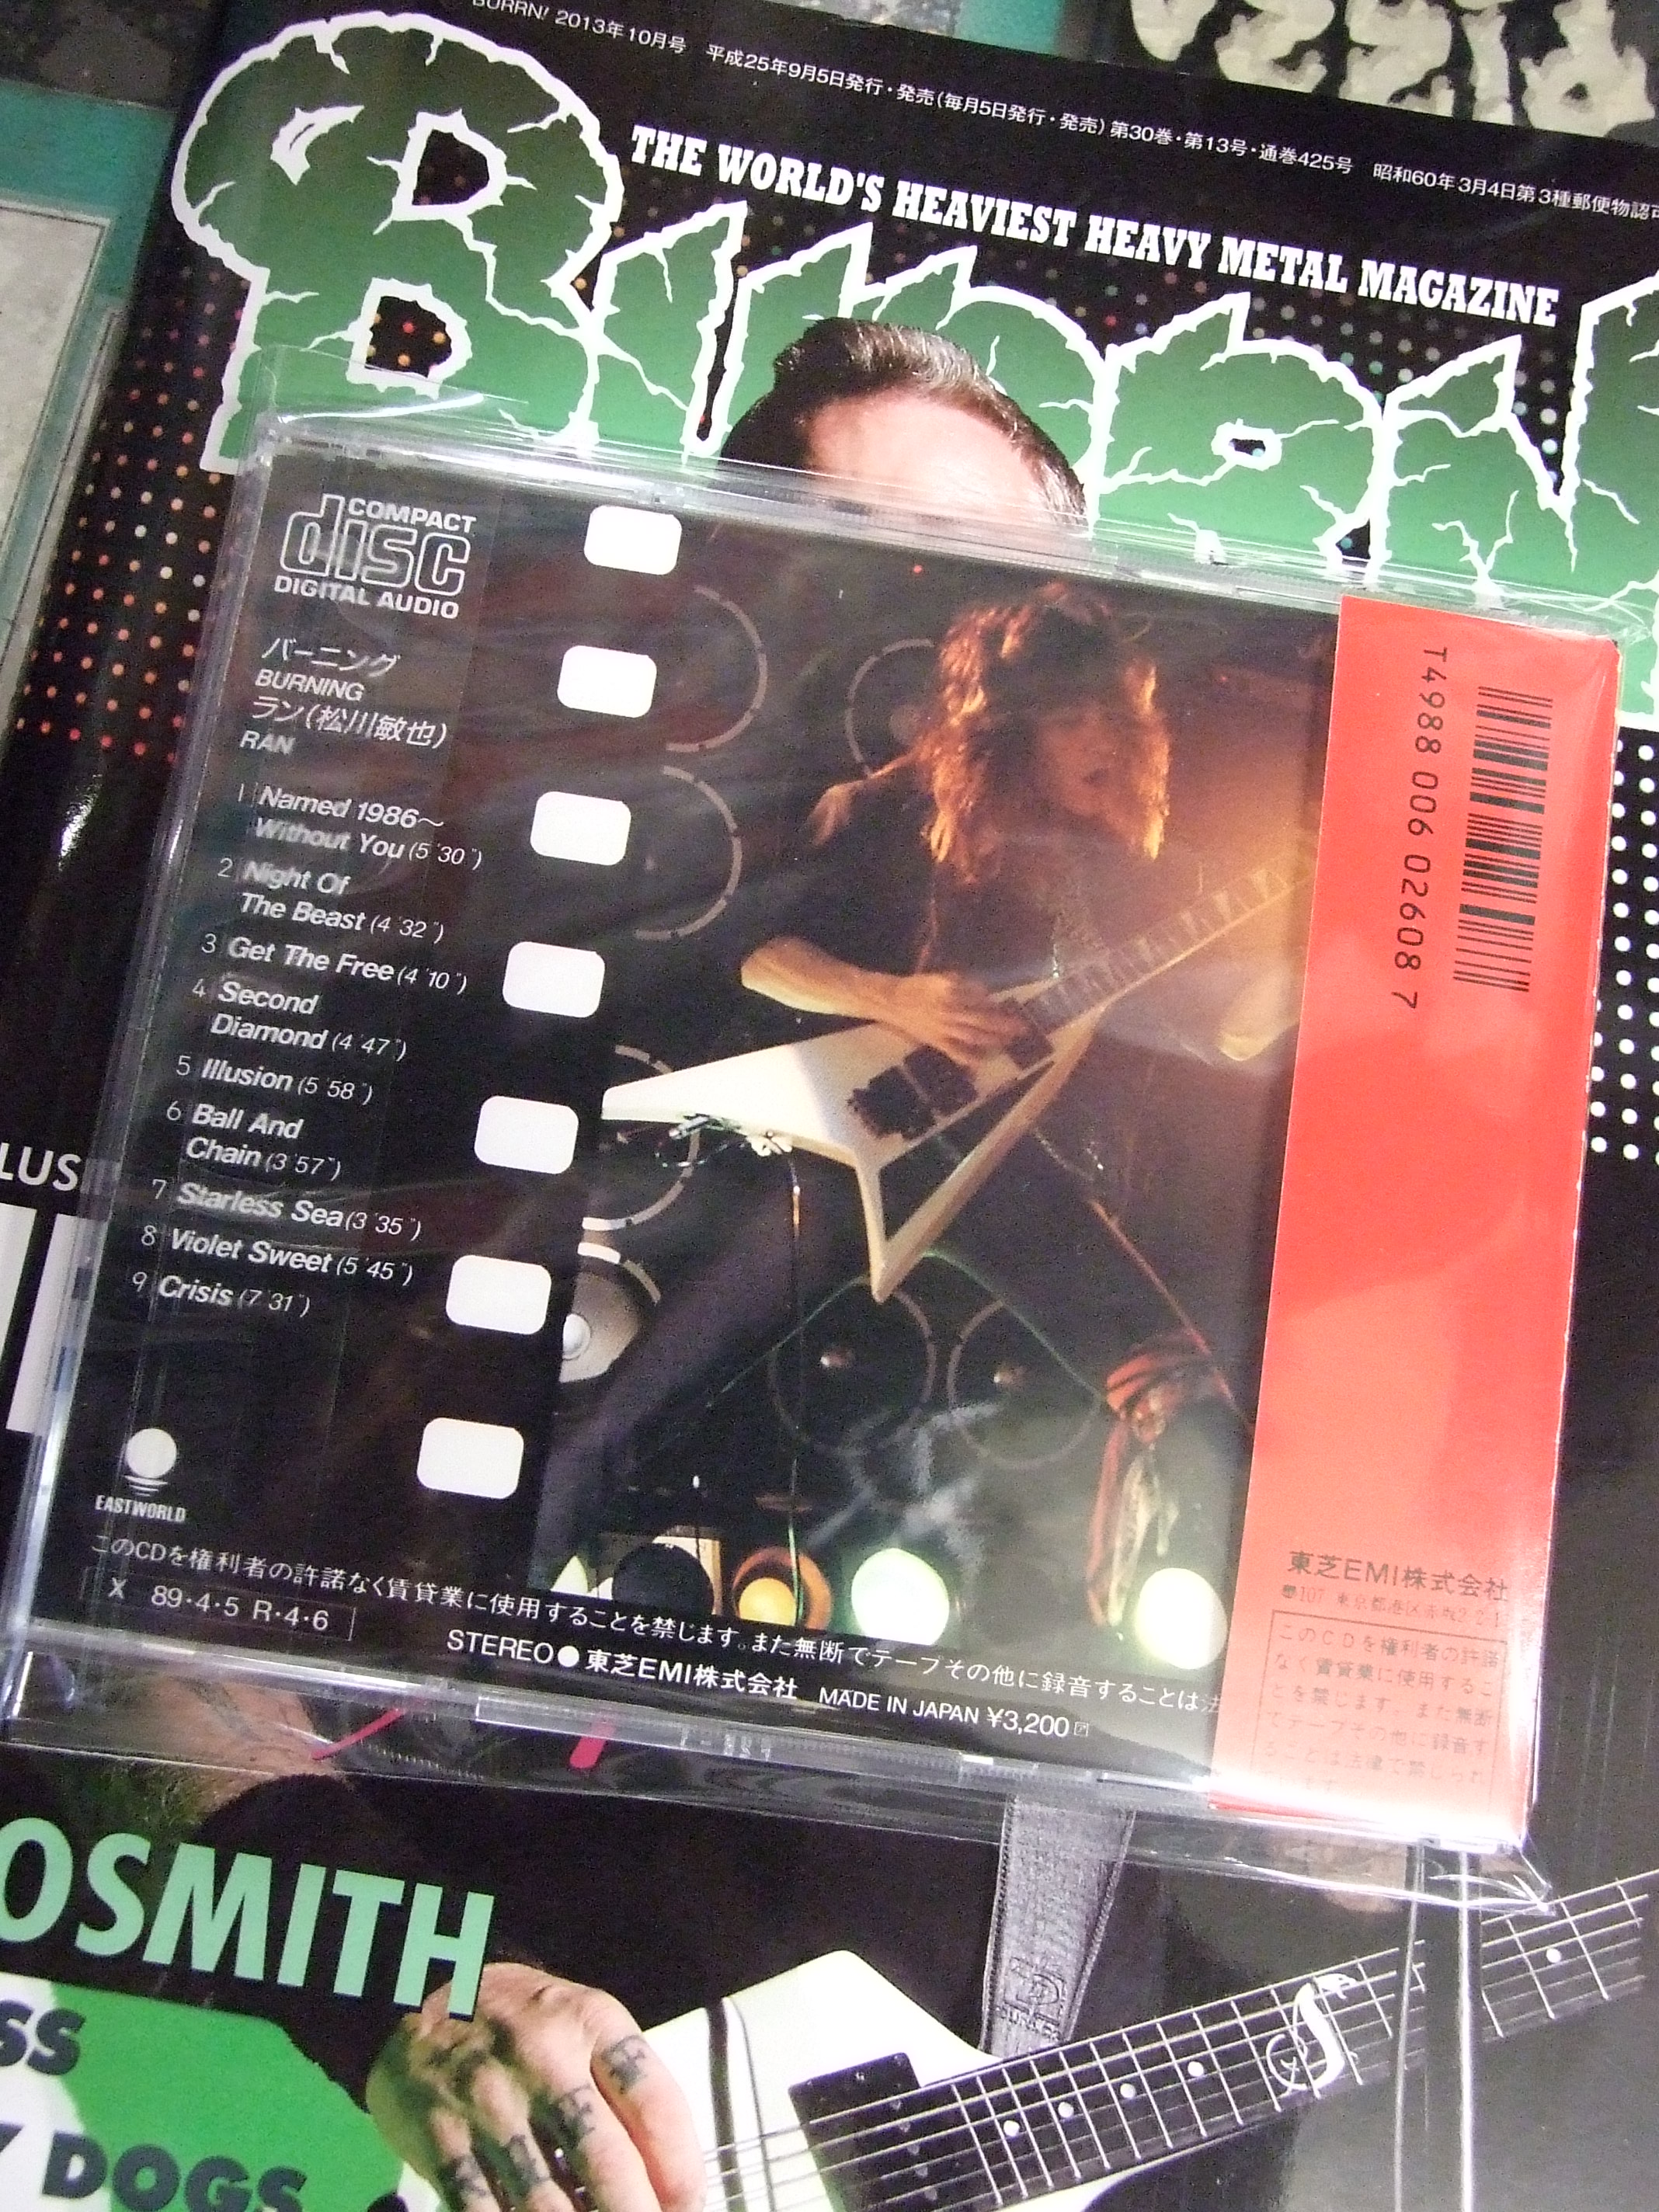 13) CD DVD 中古買取 関西 大阪 東大阪 八戸ノ里 八尾 CD買取なら コングランド